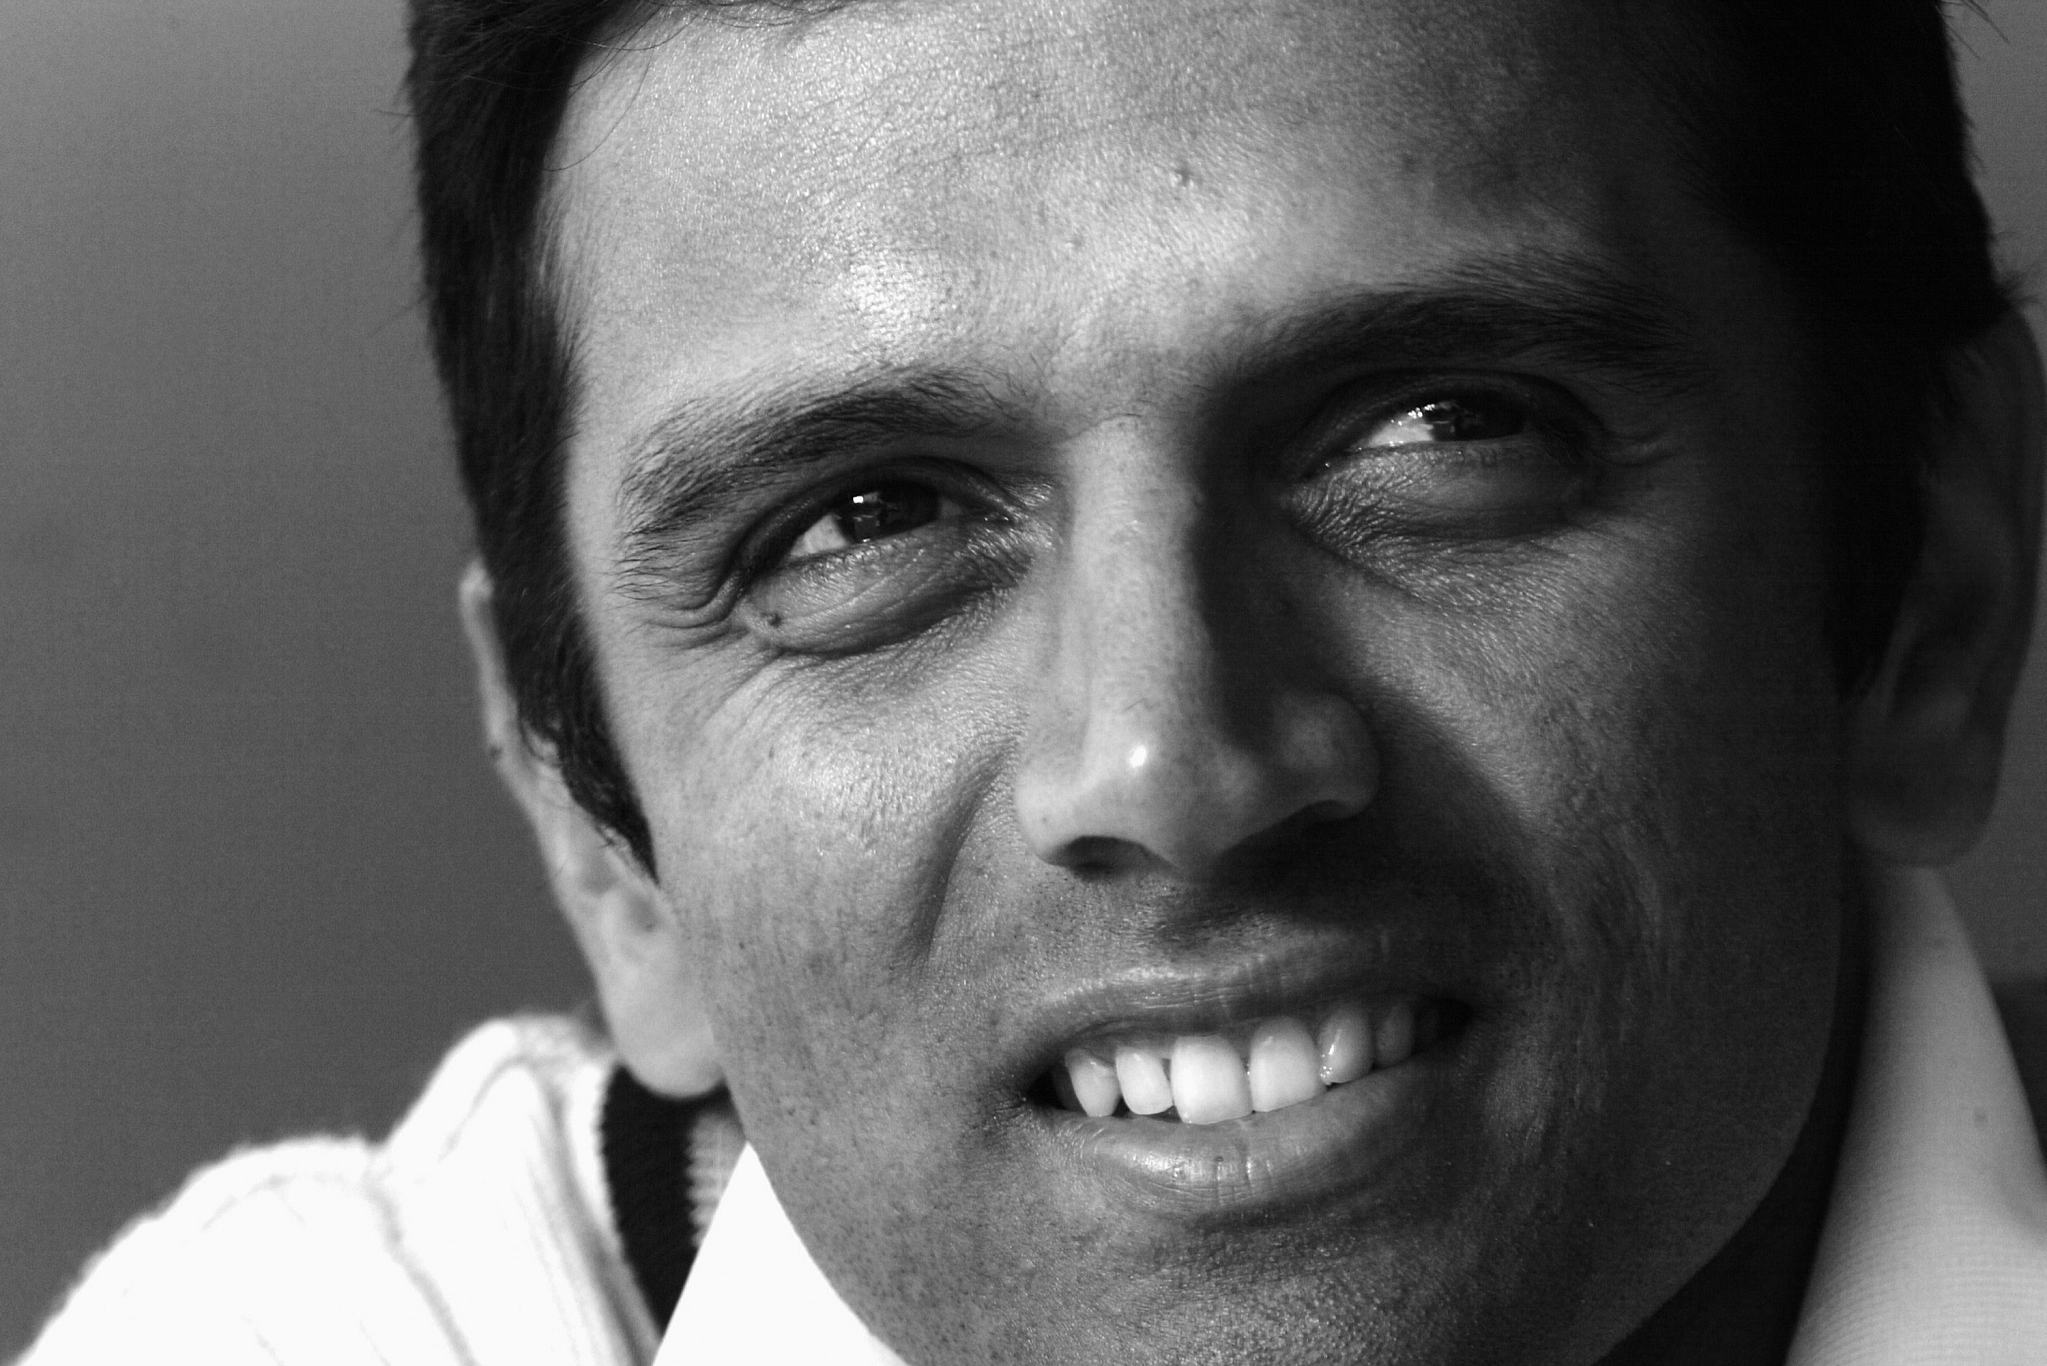 Former Indian cricketer Rahul Dravid. (Hamish Blair/Getty Images)